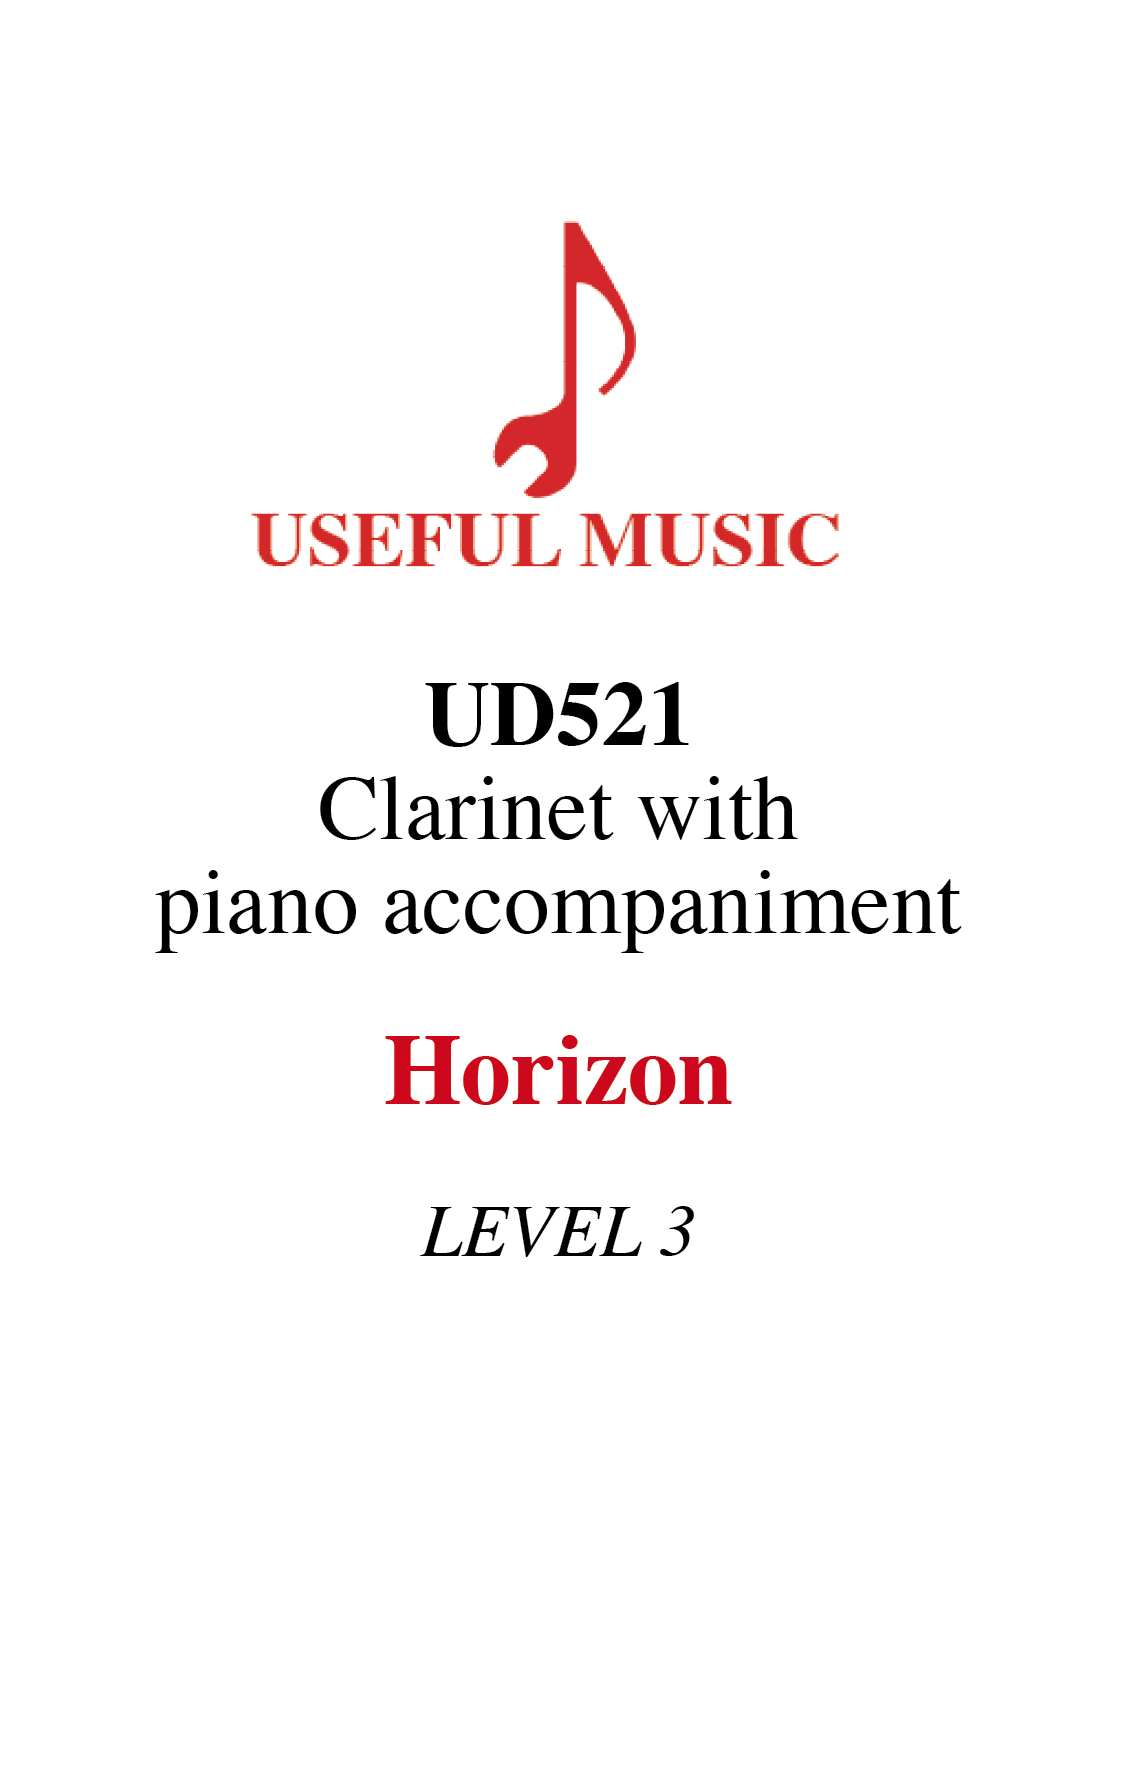 Horizon - Clarinet with piano accompaniment